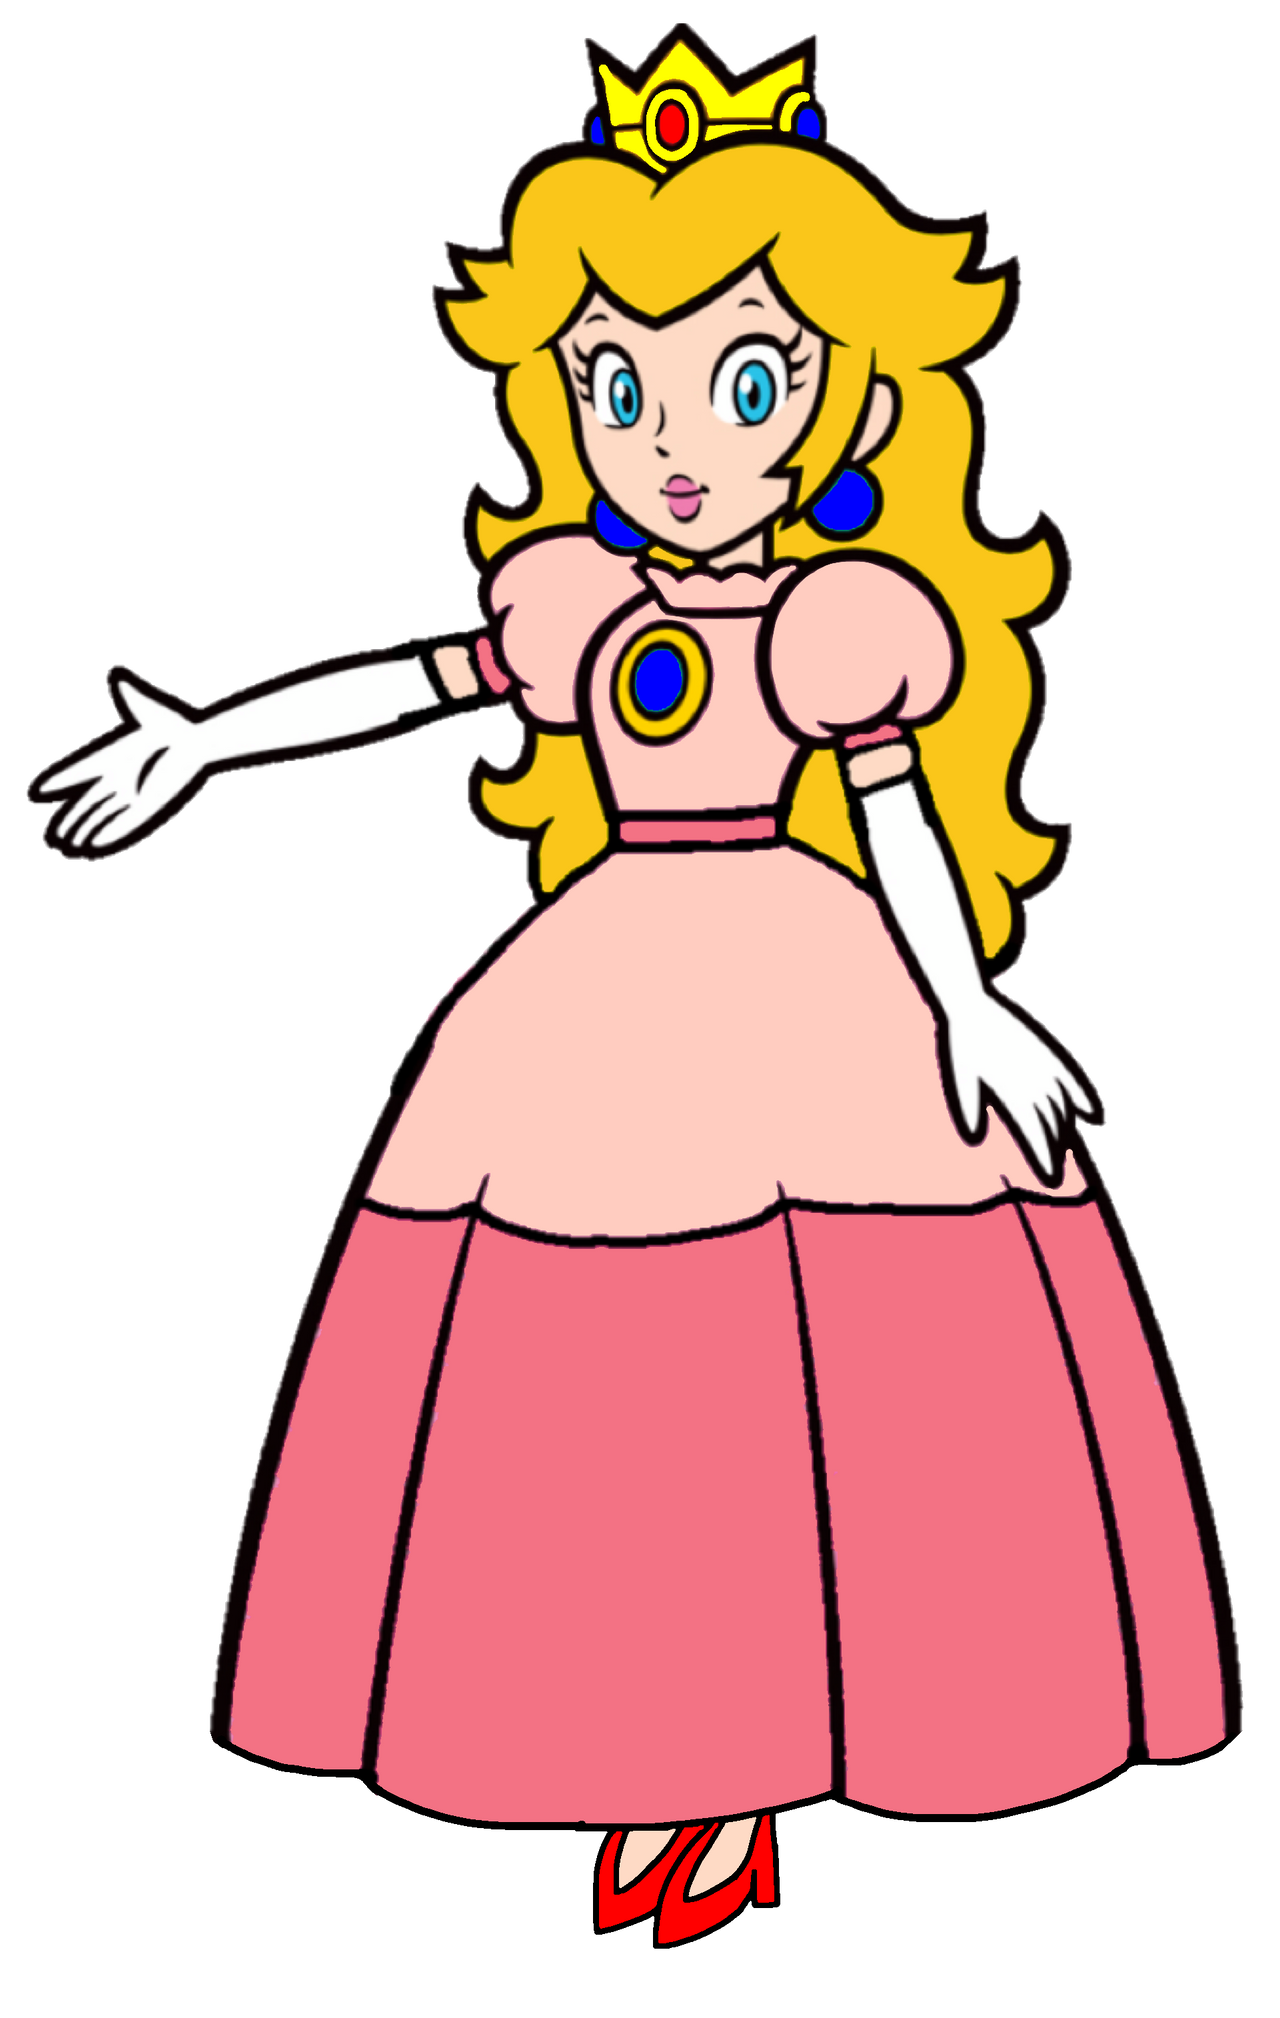 Super Mario Sm64 Princess Peach 2d By Joshuat1306 On Deviantart